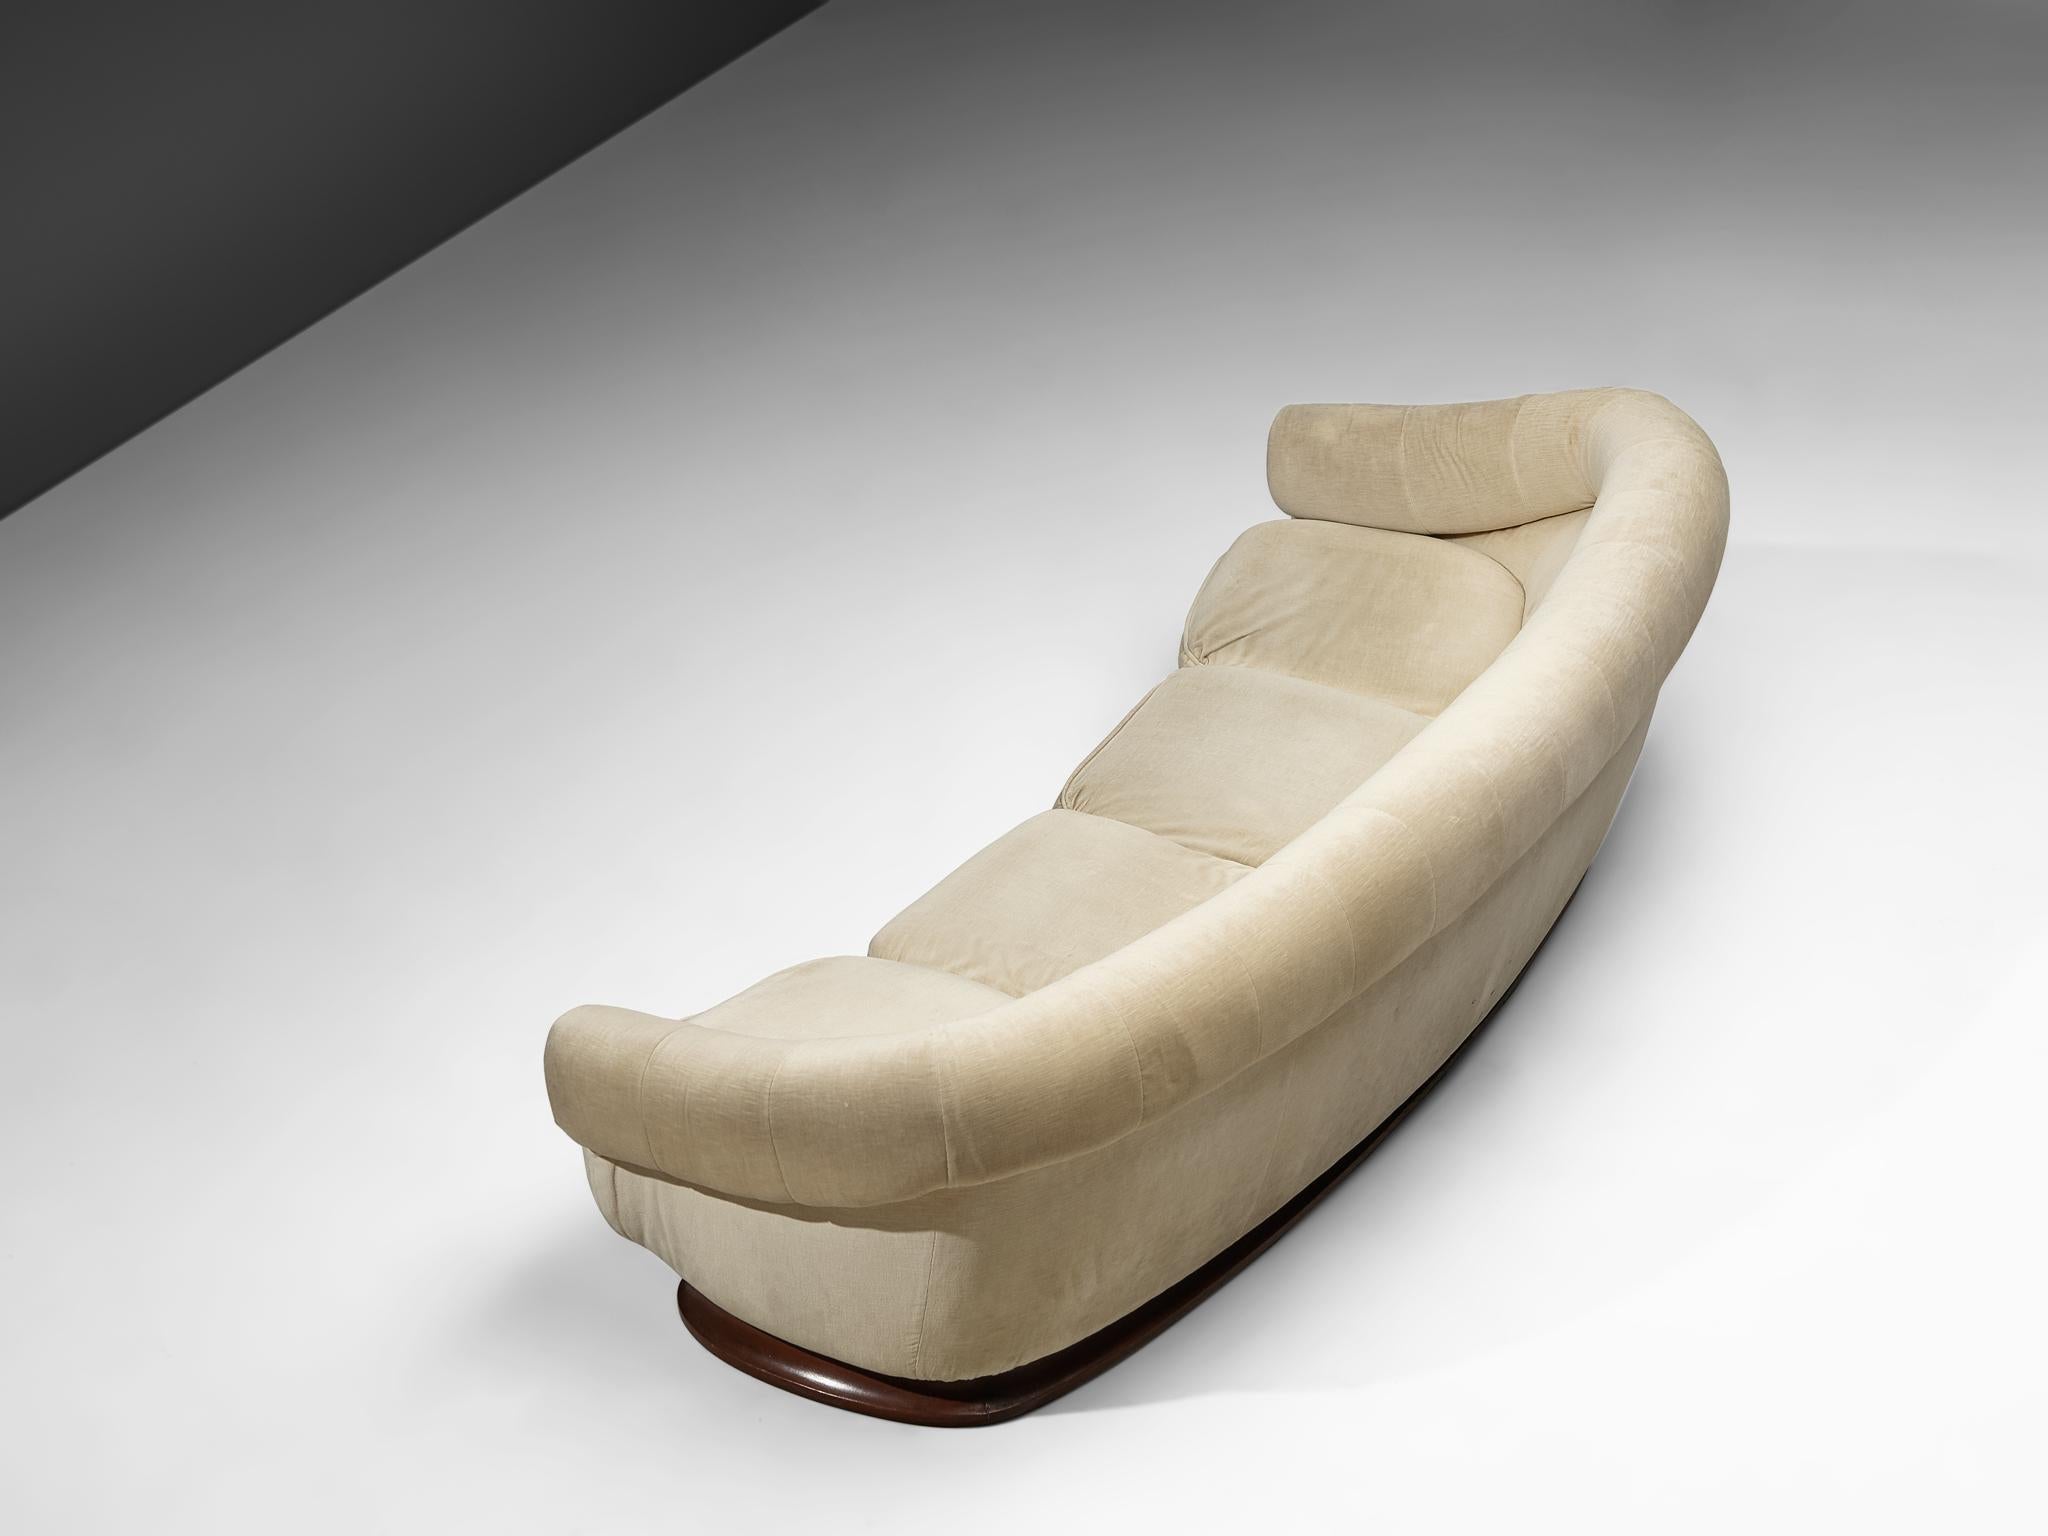 Italian Art Deco Sofa with Curved Shape in Beige Velvet